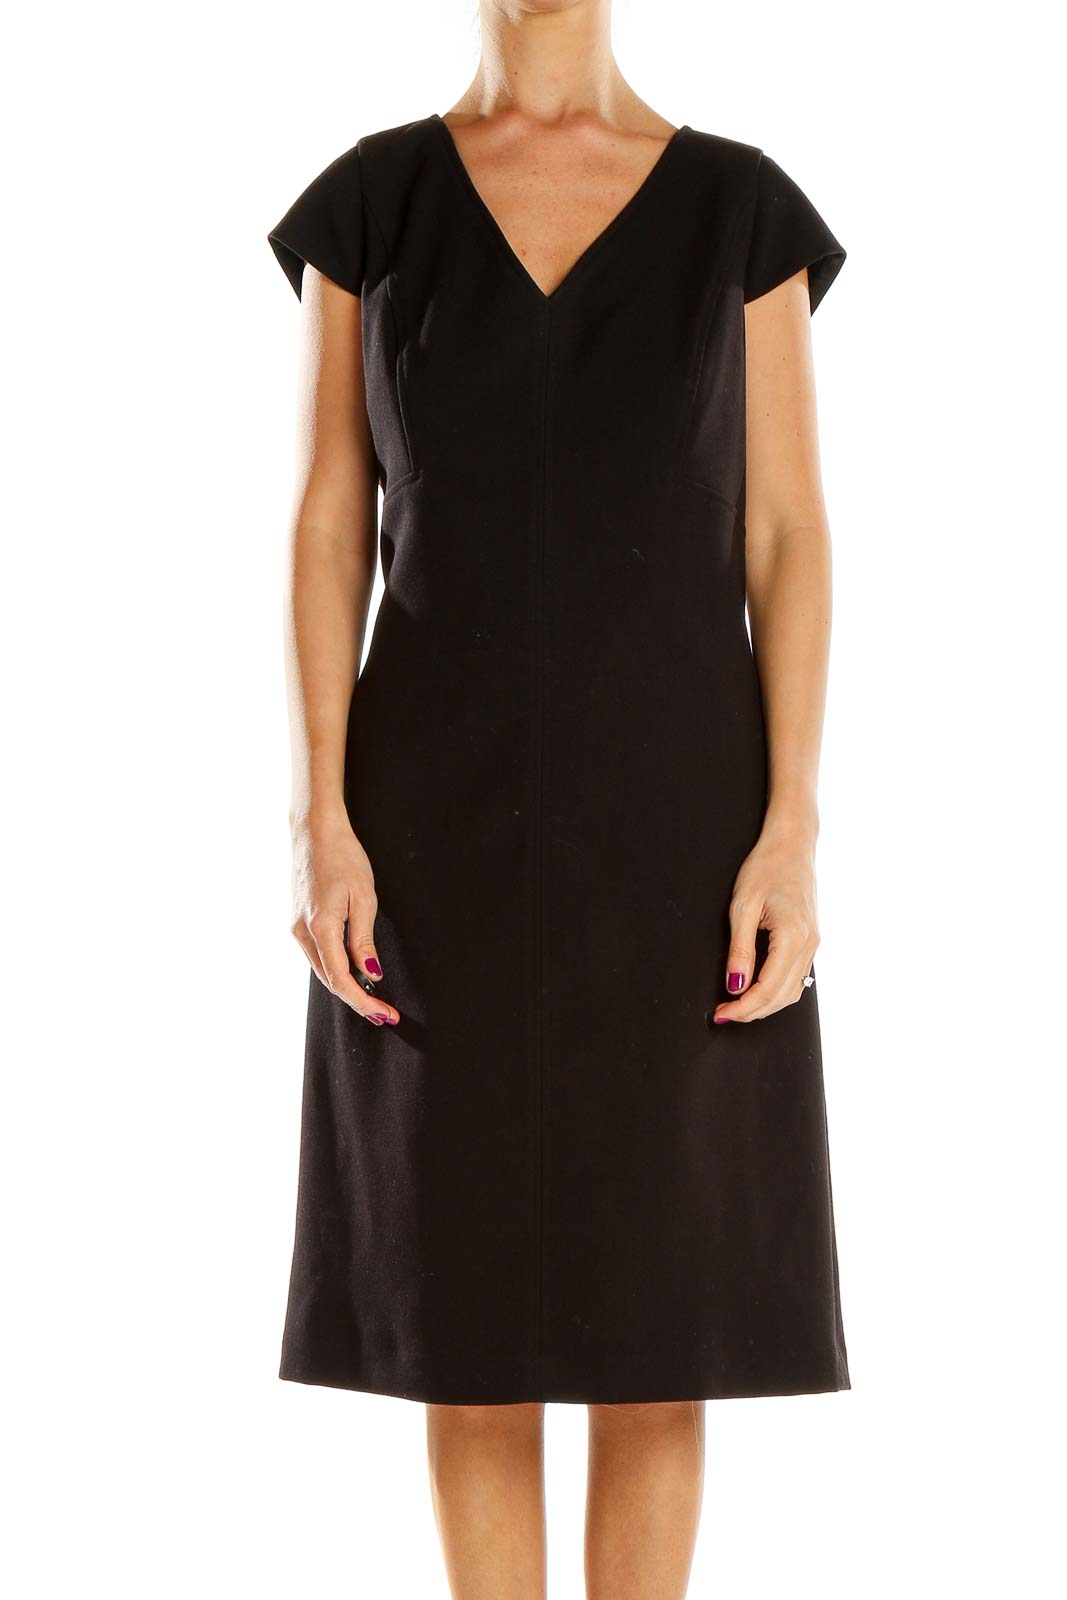 Black Classic A-Line Dress Front